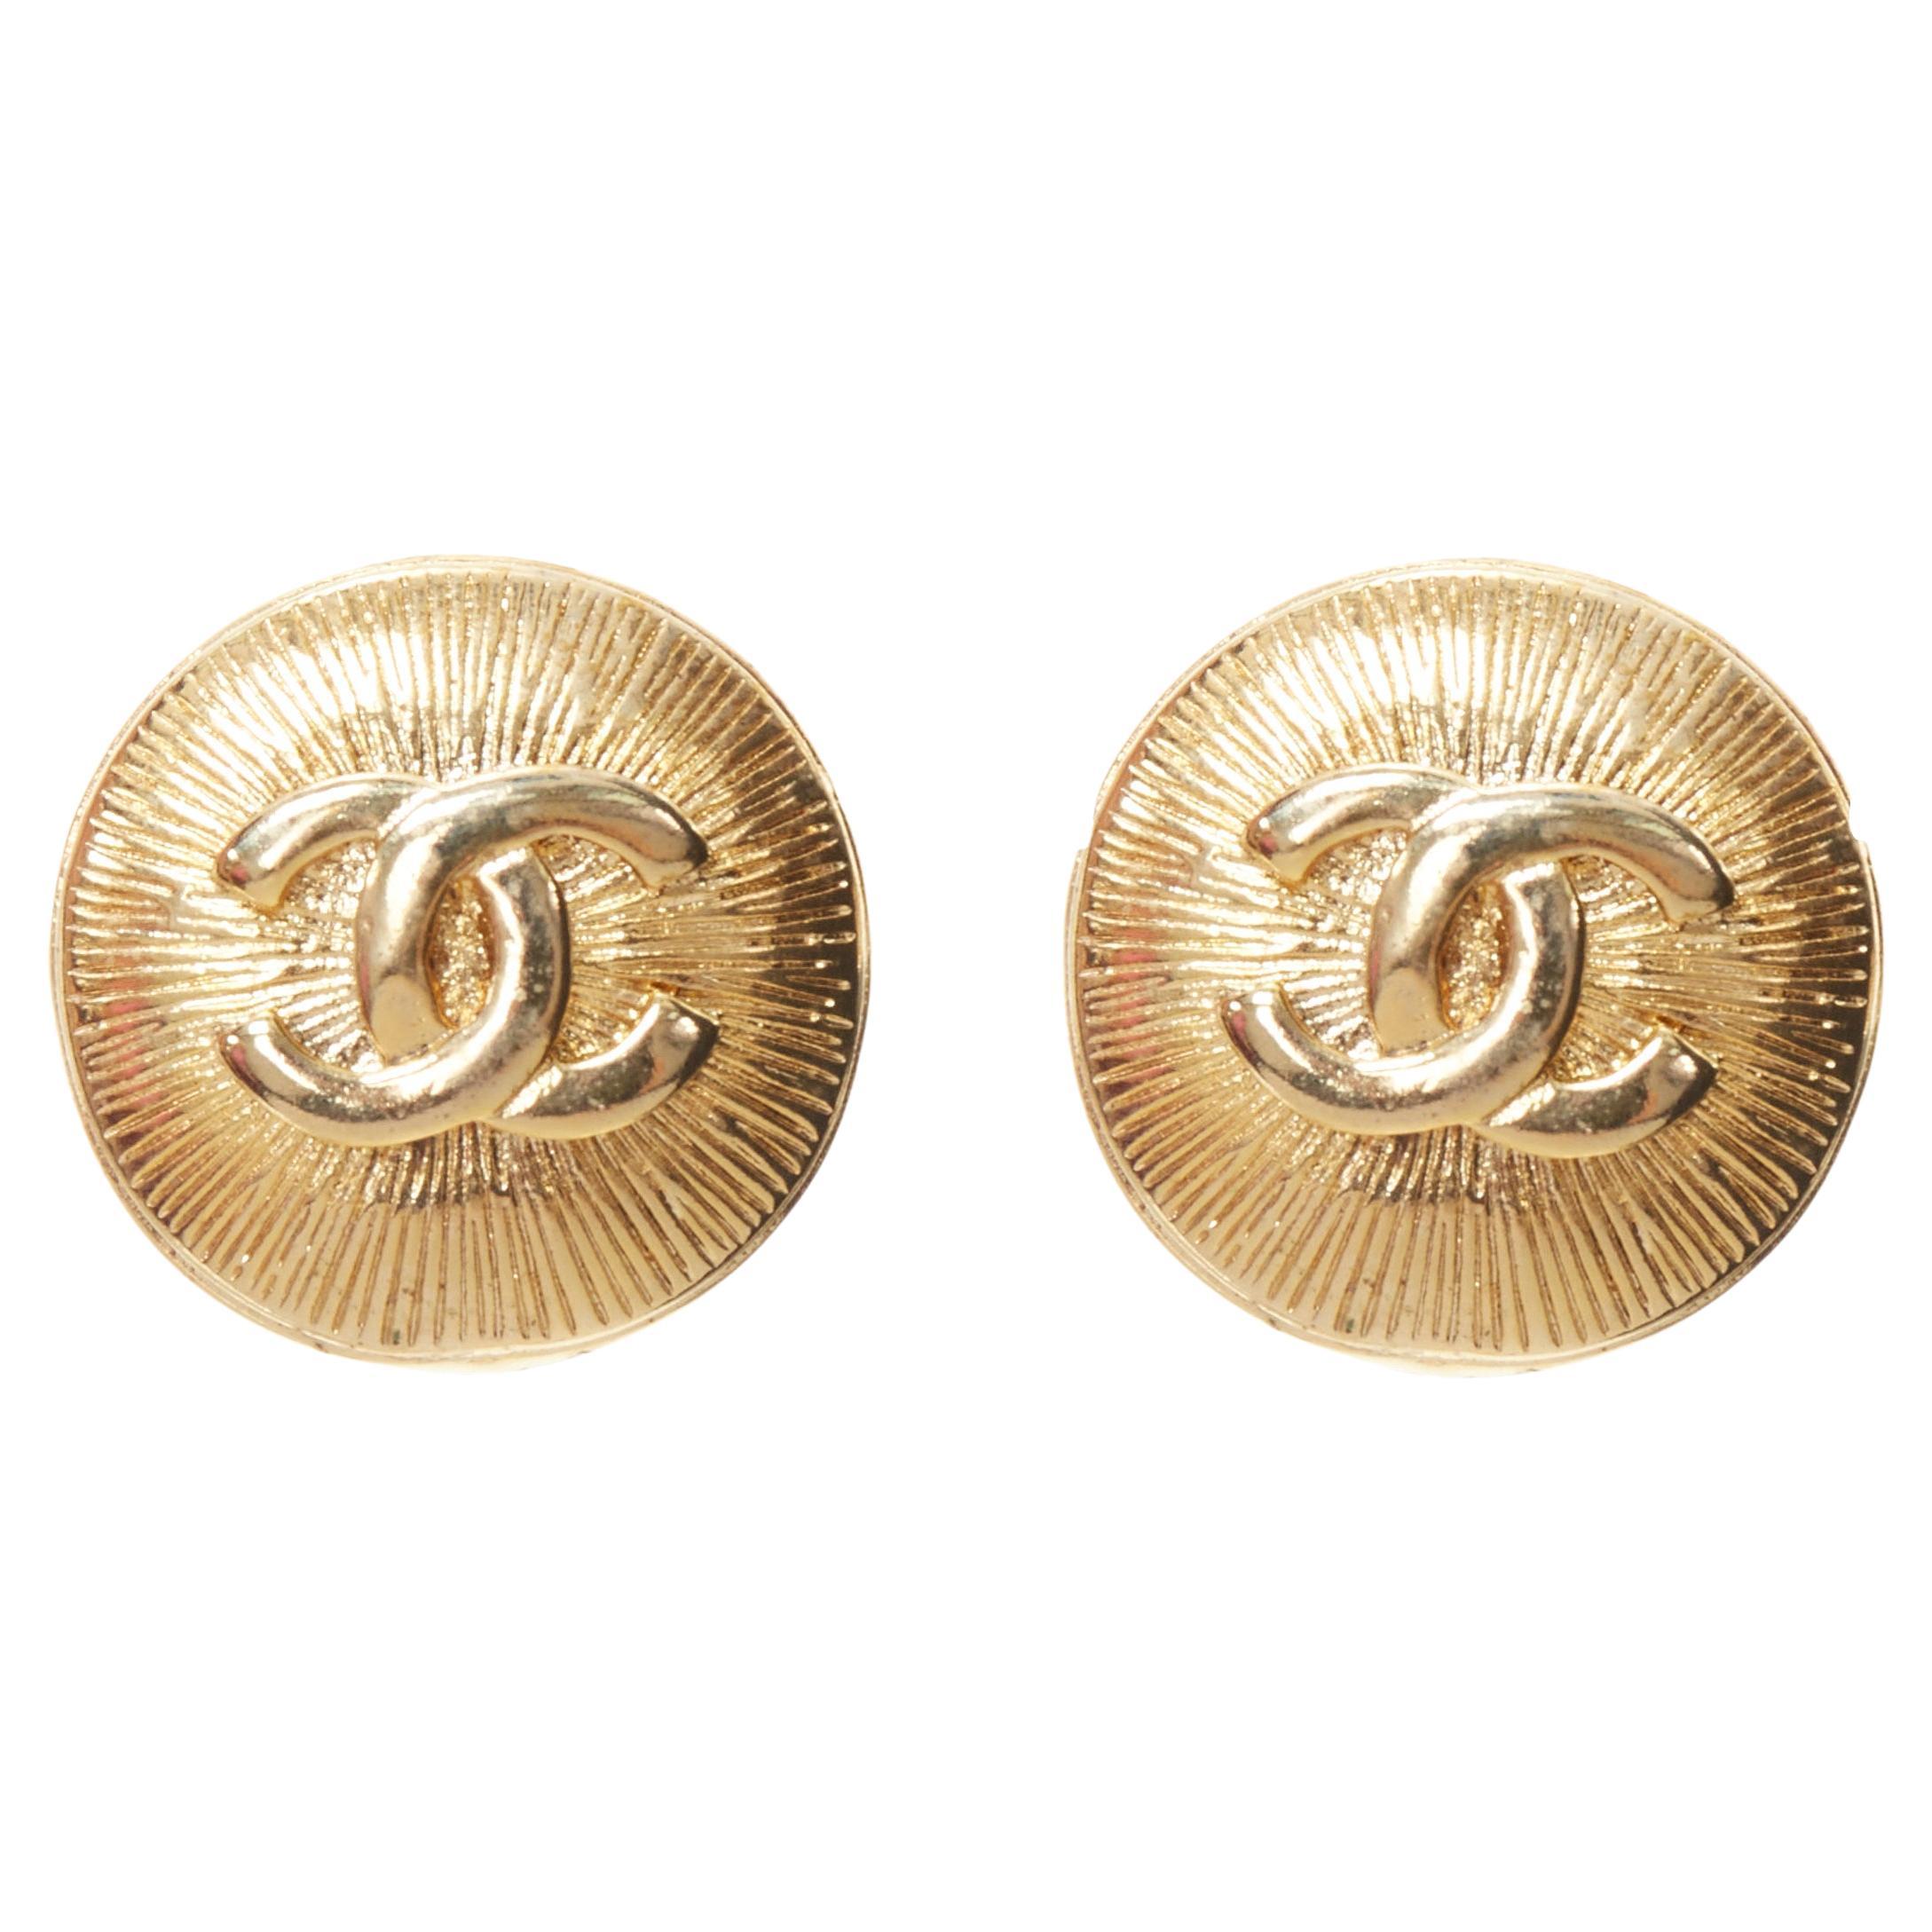 Chanel Logo Earrings - 29 For Sale on 1stDibs